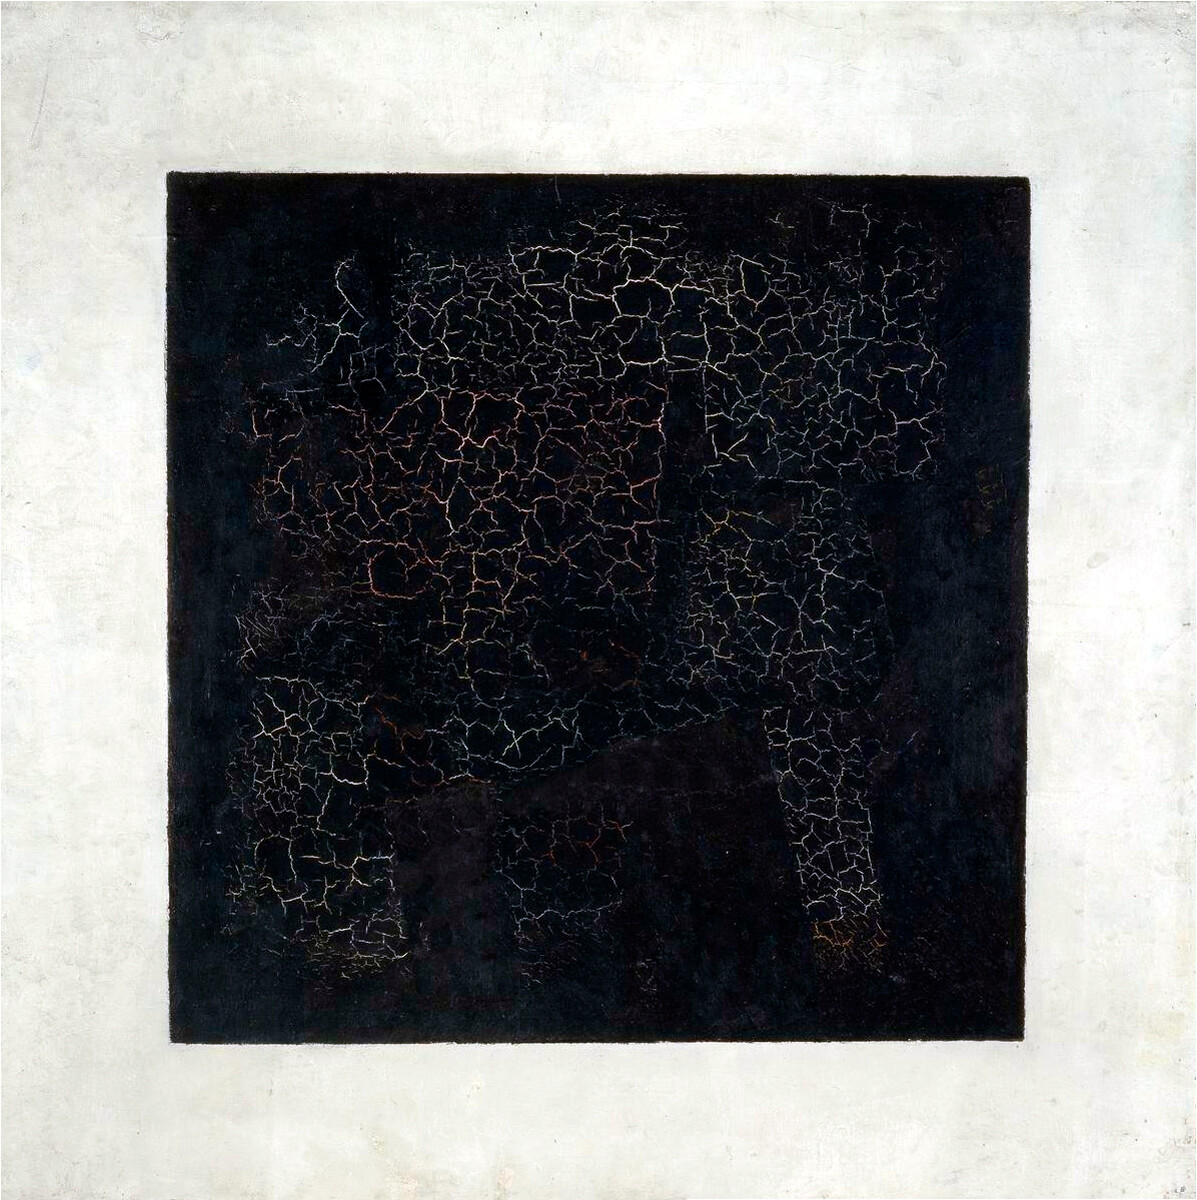 Kazimir Malevich. The Black Square, 1915